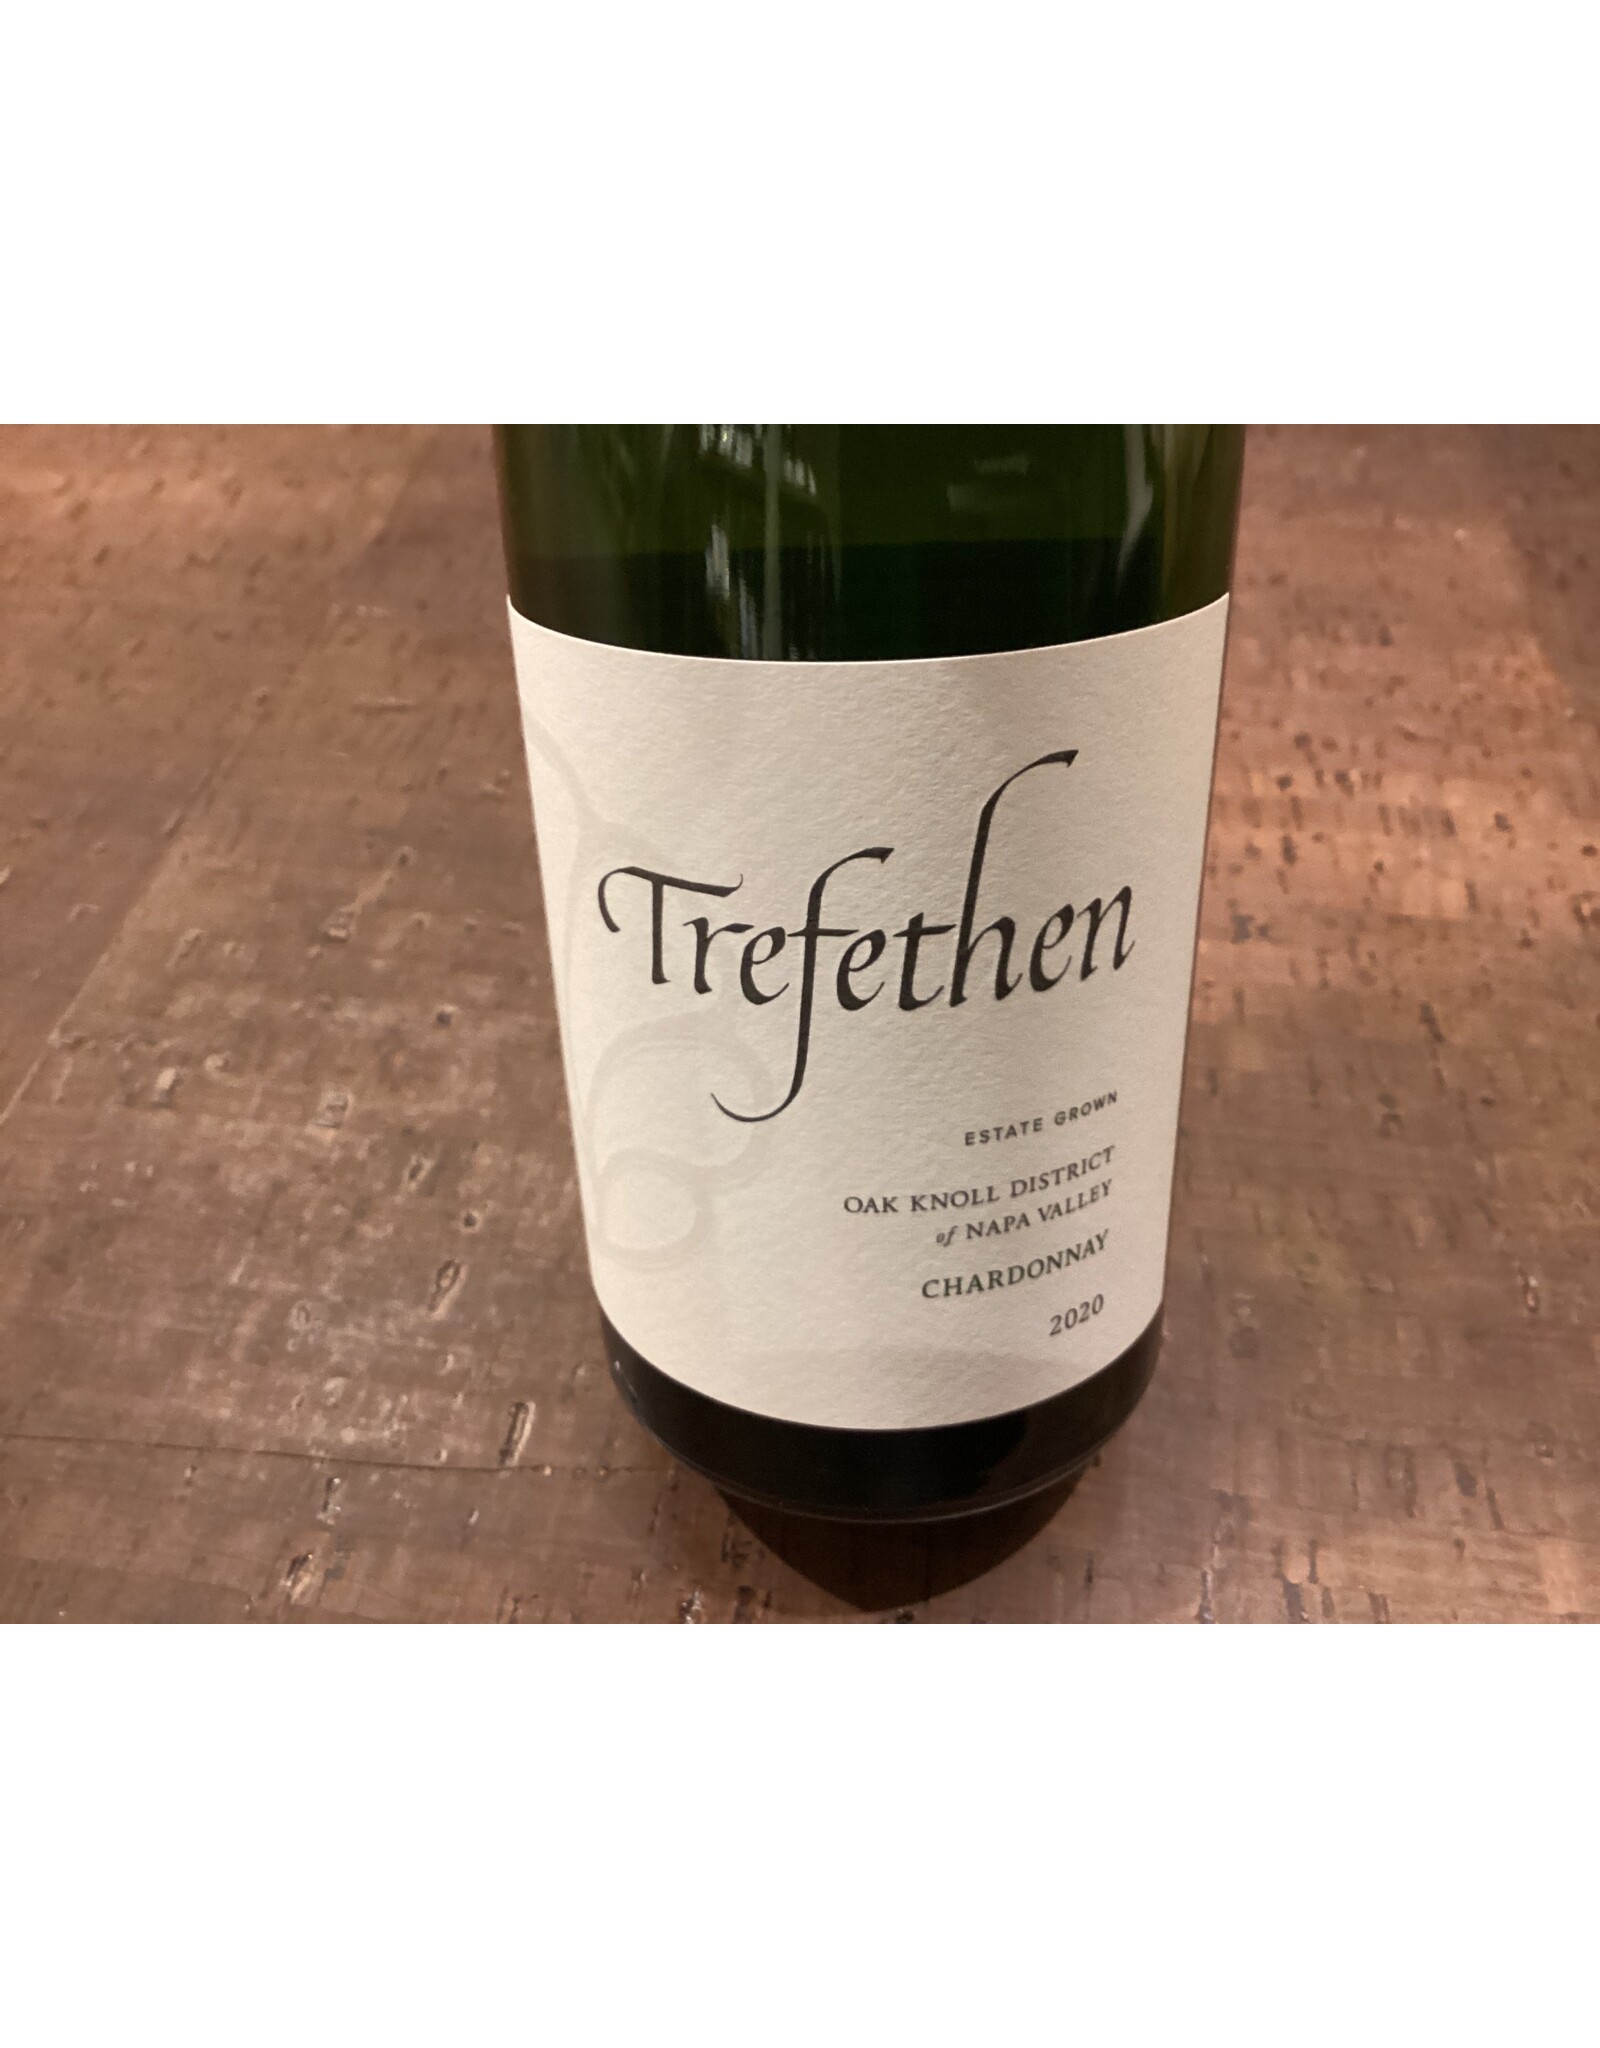 Trefethen Oak Knoll District Chardonnay